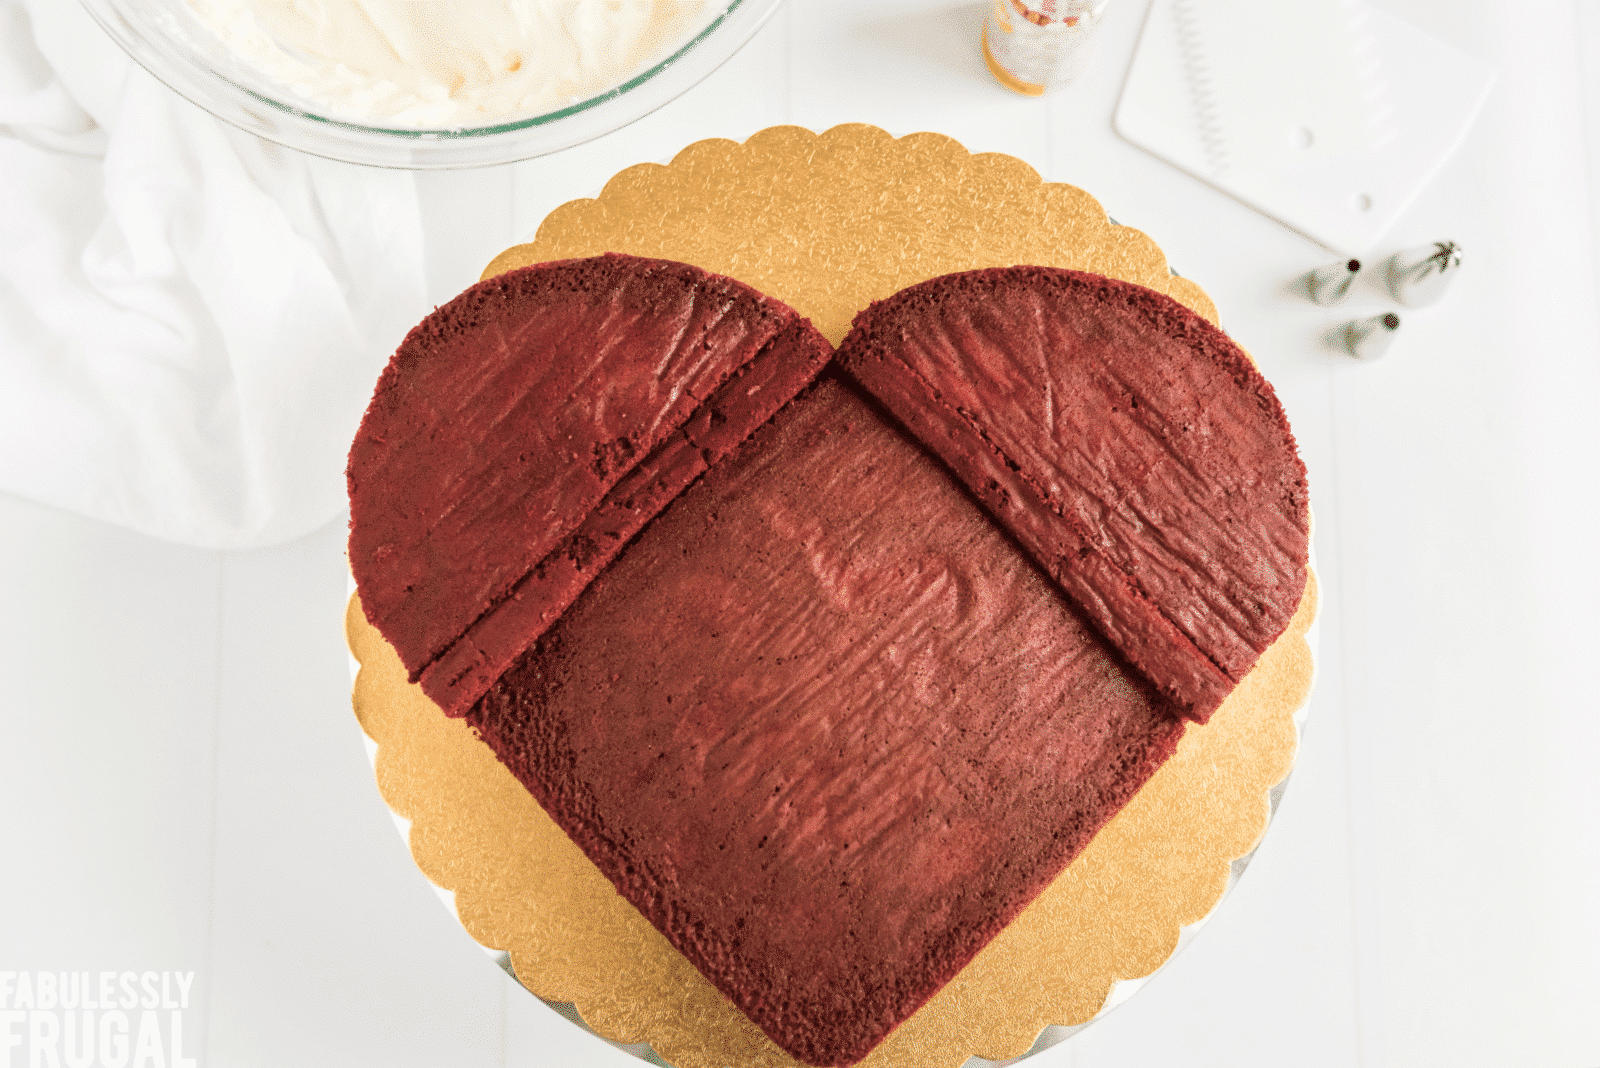 How to make a heart cake